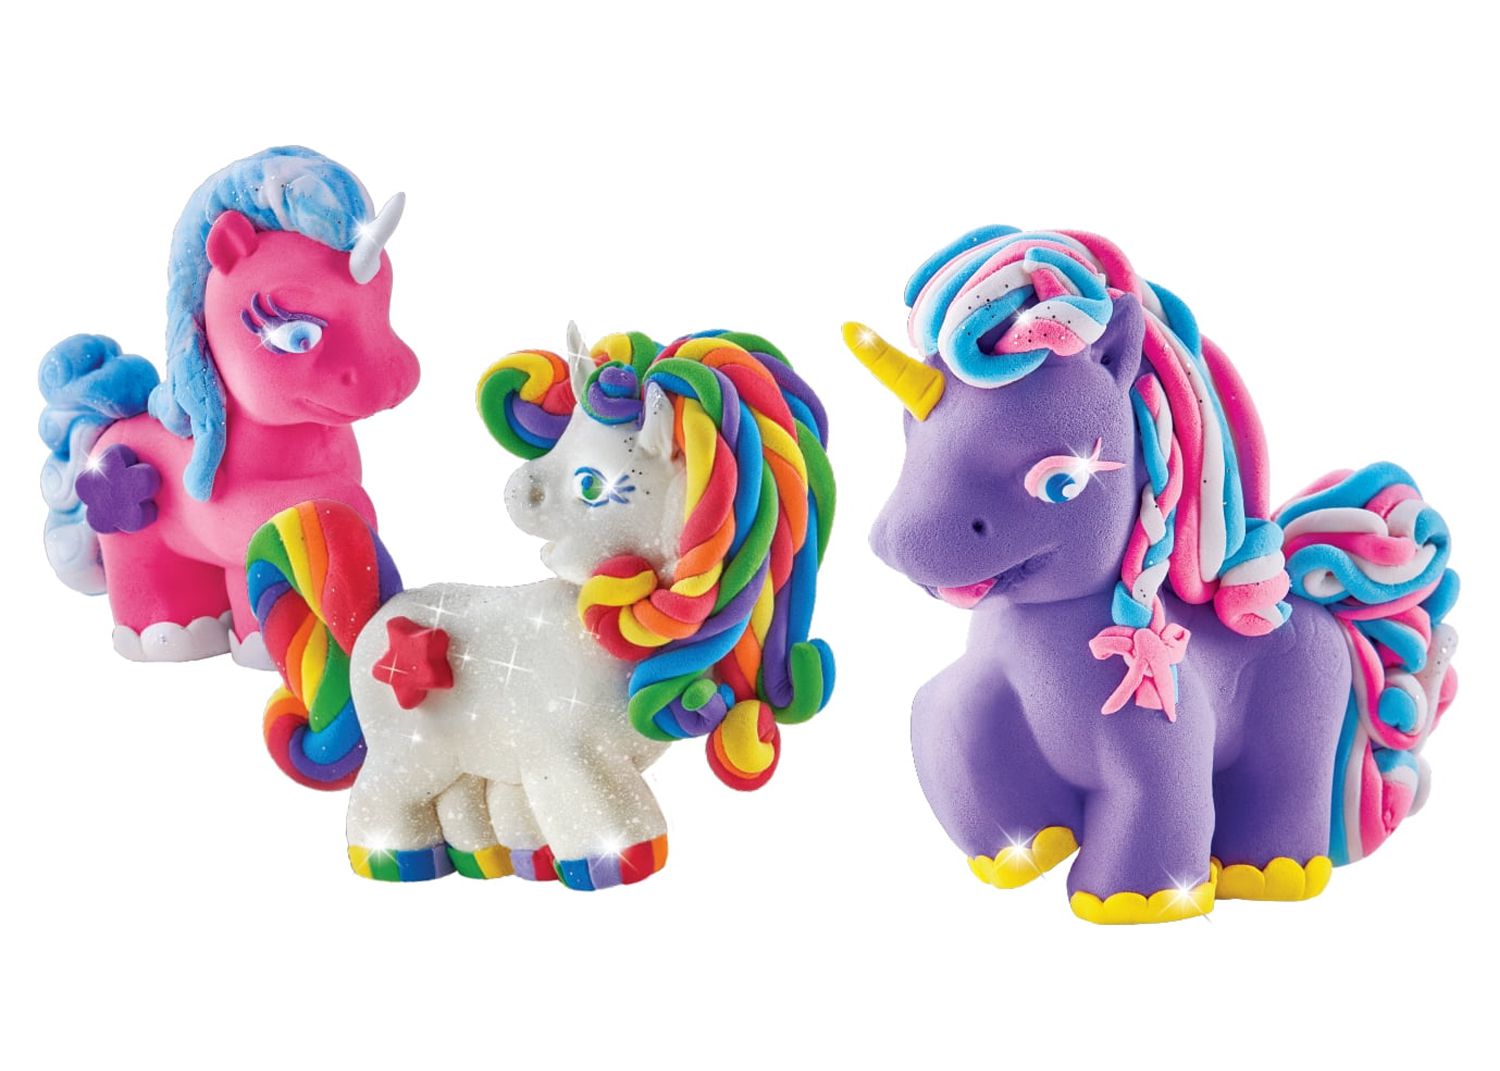 Cra-Z-Art Softee Dough Sparkling Unicorns Modeling Compound Play Set - image 2 of 9